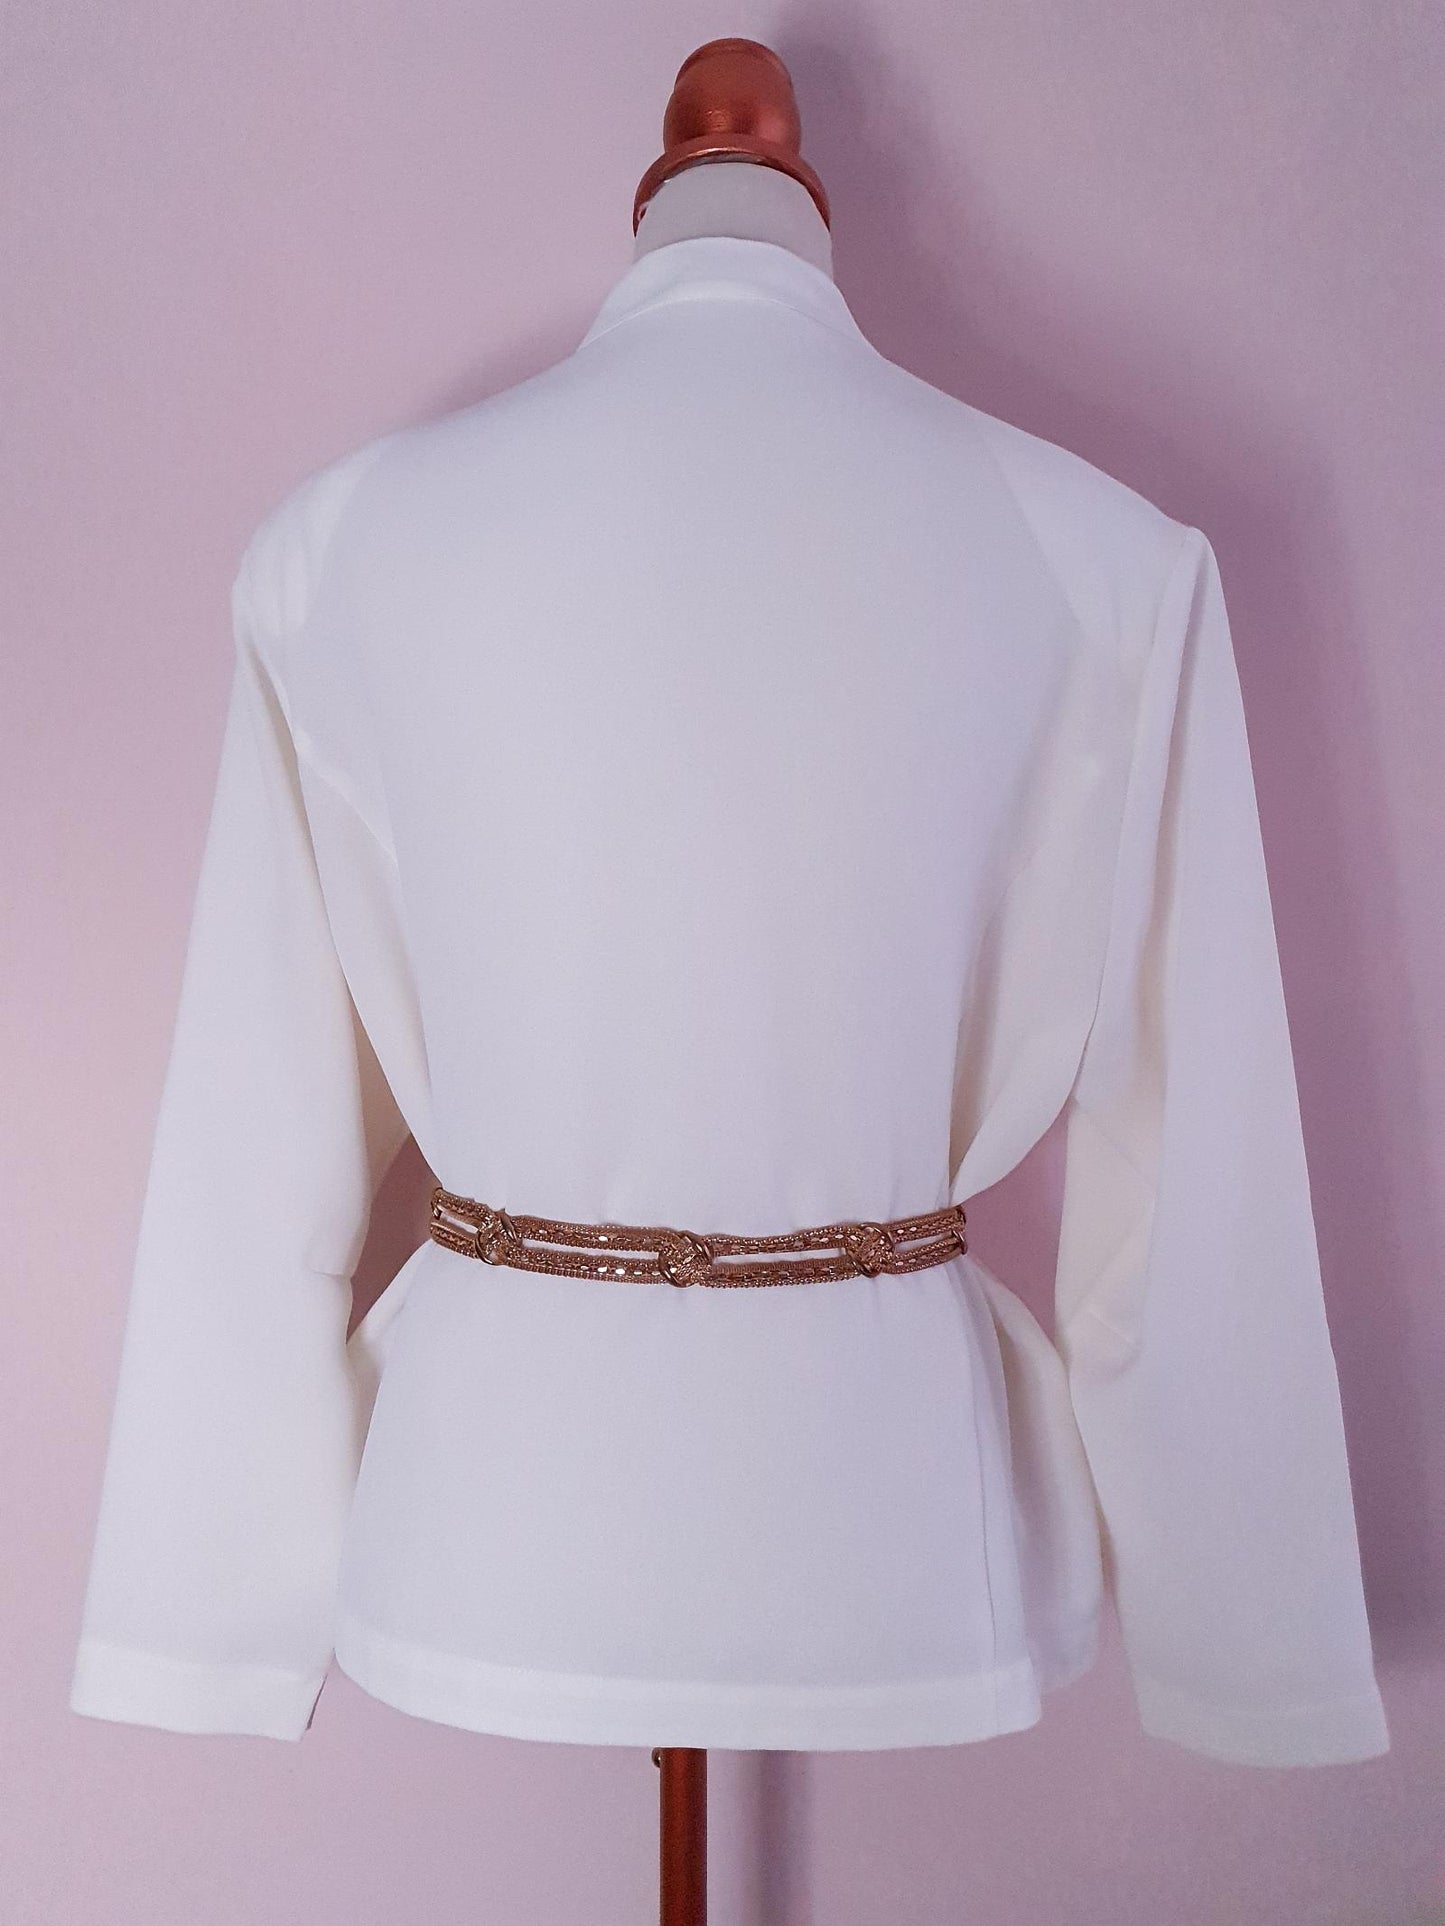 Elegant Vintage 1980s Oversized Cream Embroidered Top Blouse Shirt